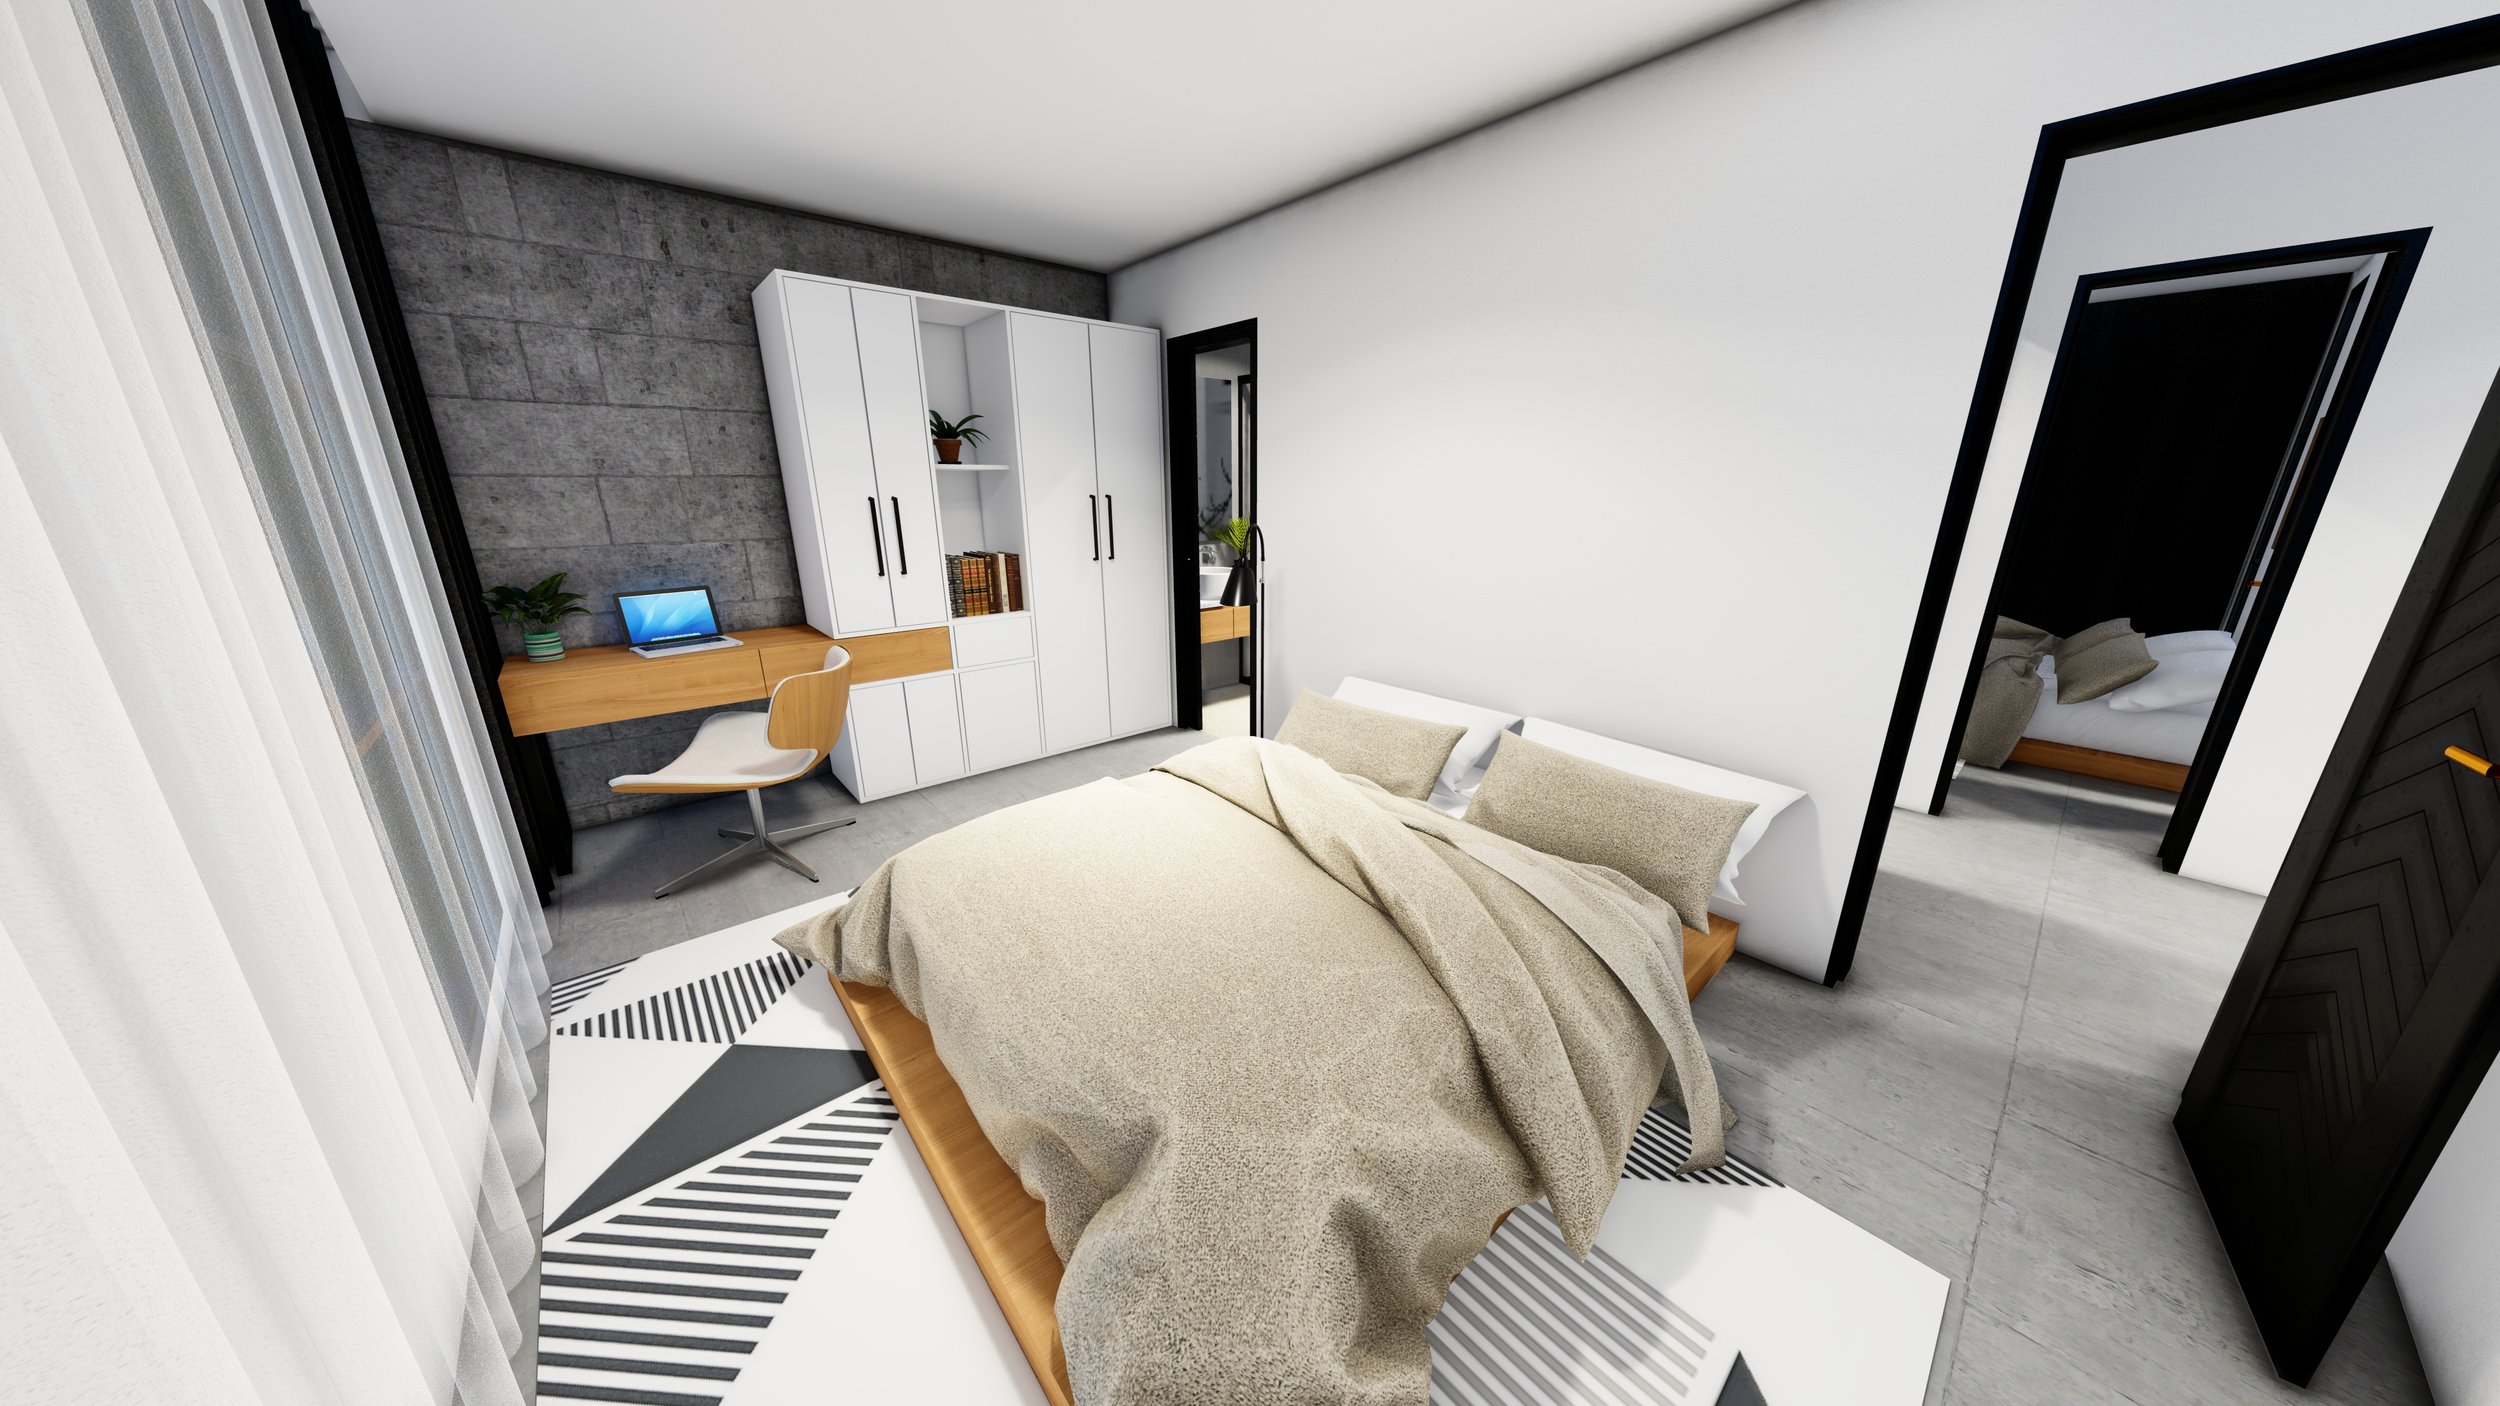 8x13 Meters Small House FLOORPLAN | 2 Bedroom House Plan | Modern Small ...